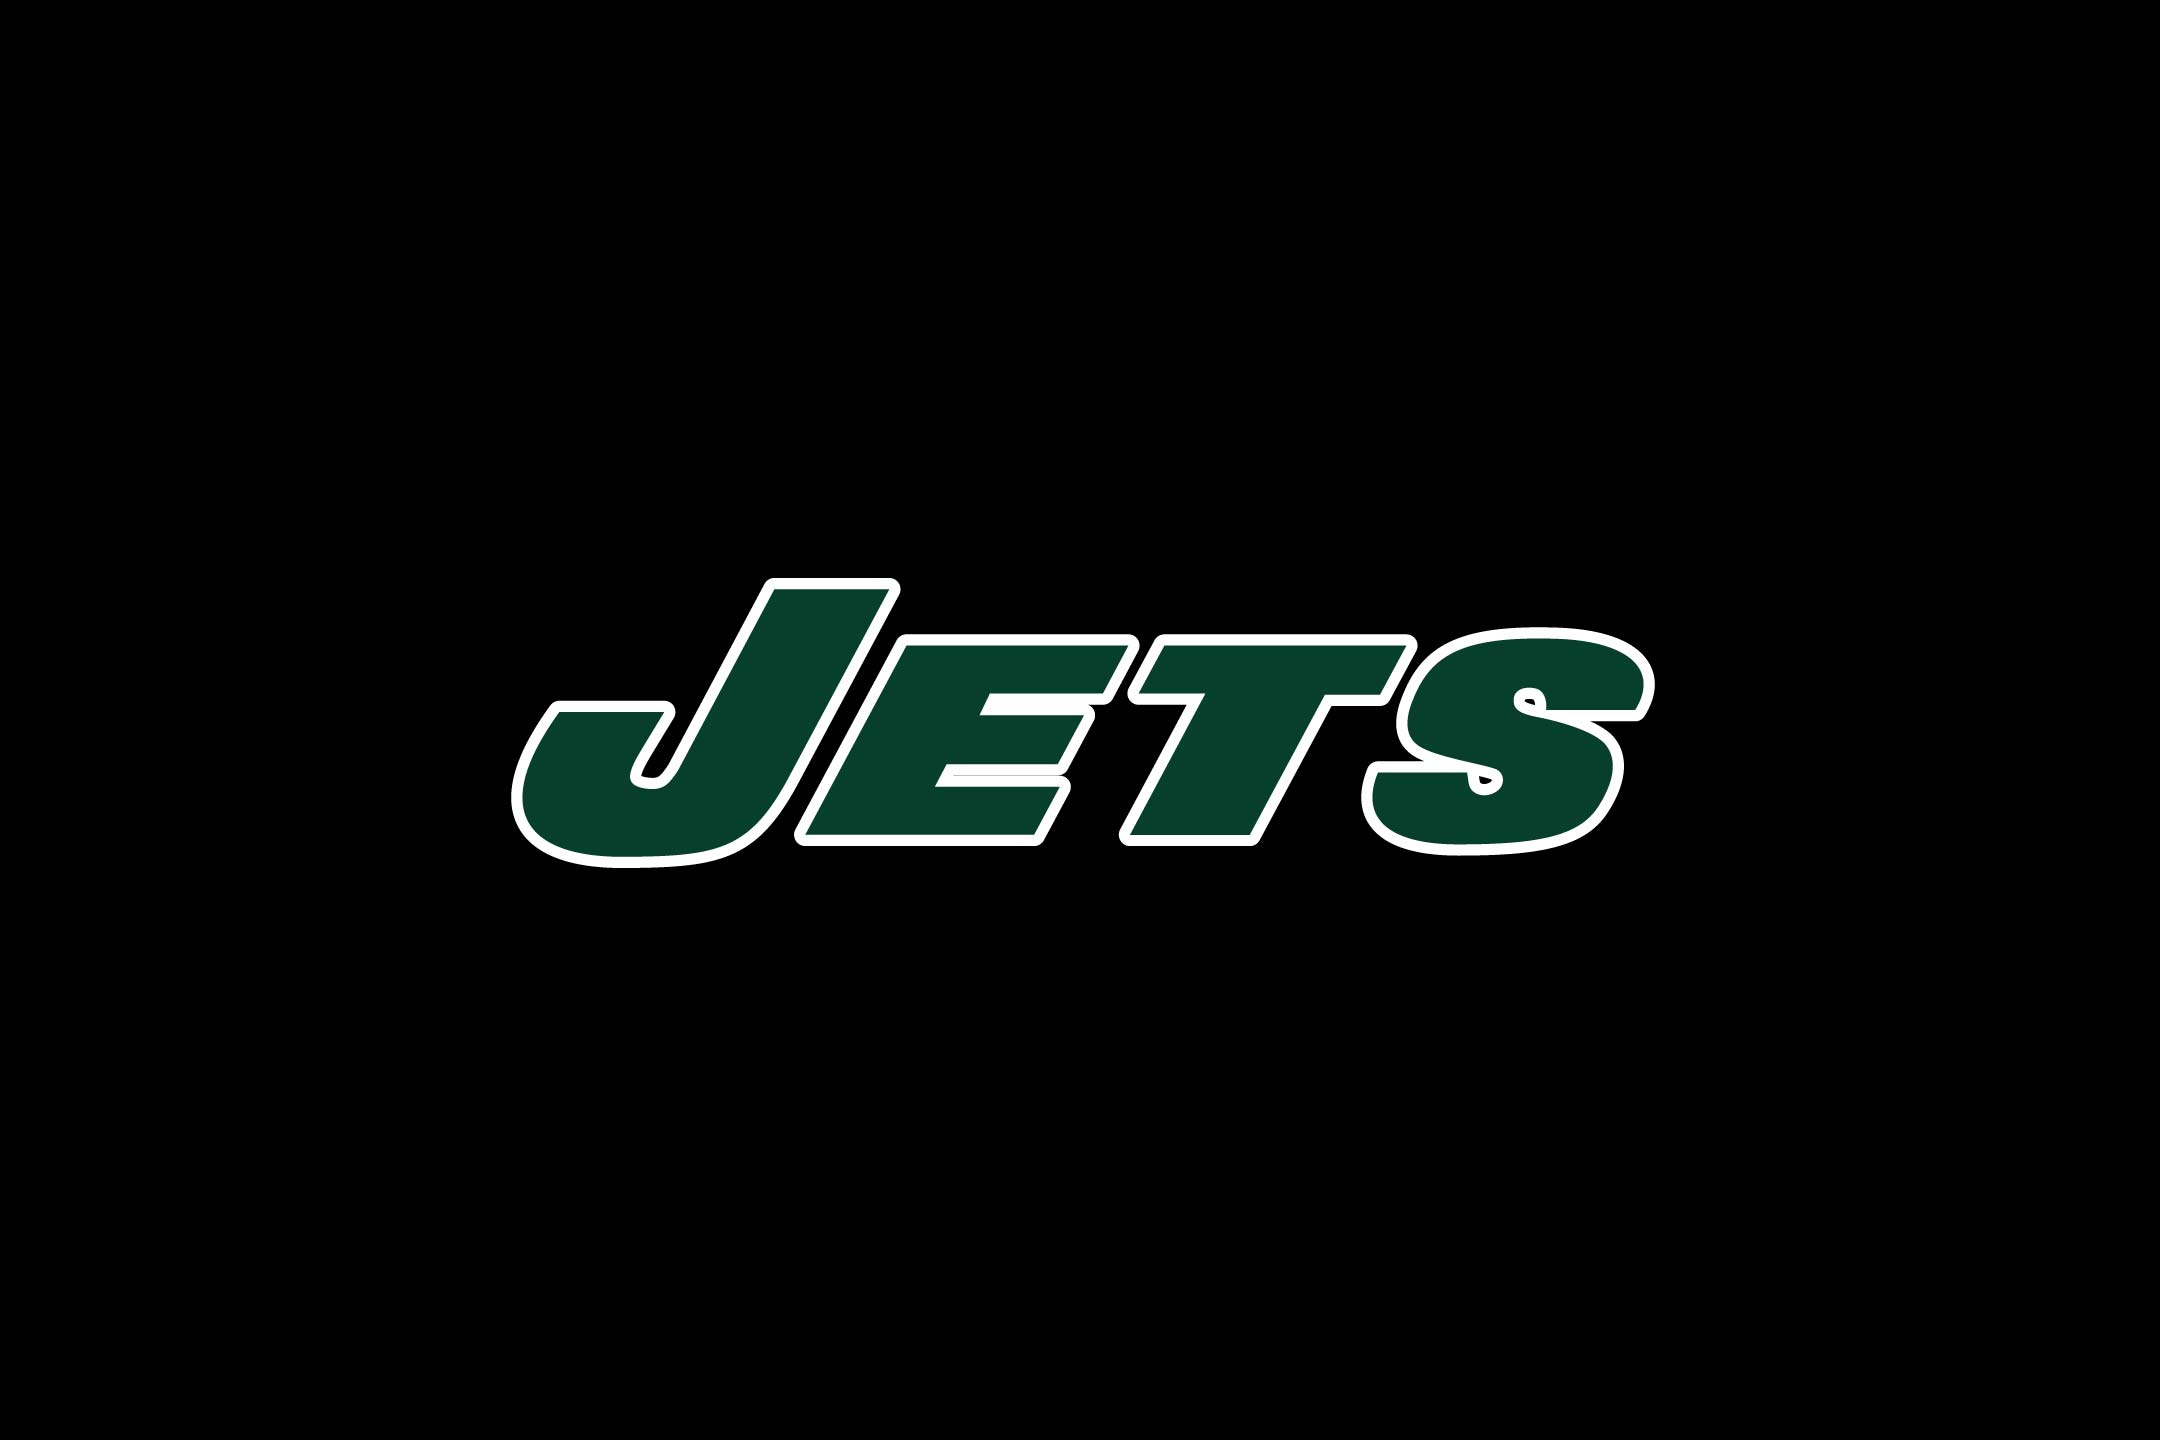 New York Jets Nfl Football Fw Wallpaper Background